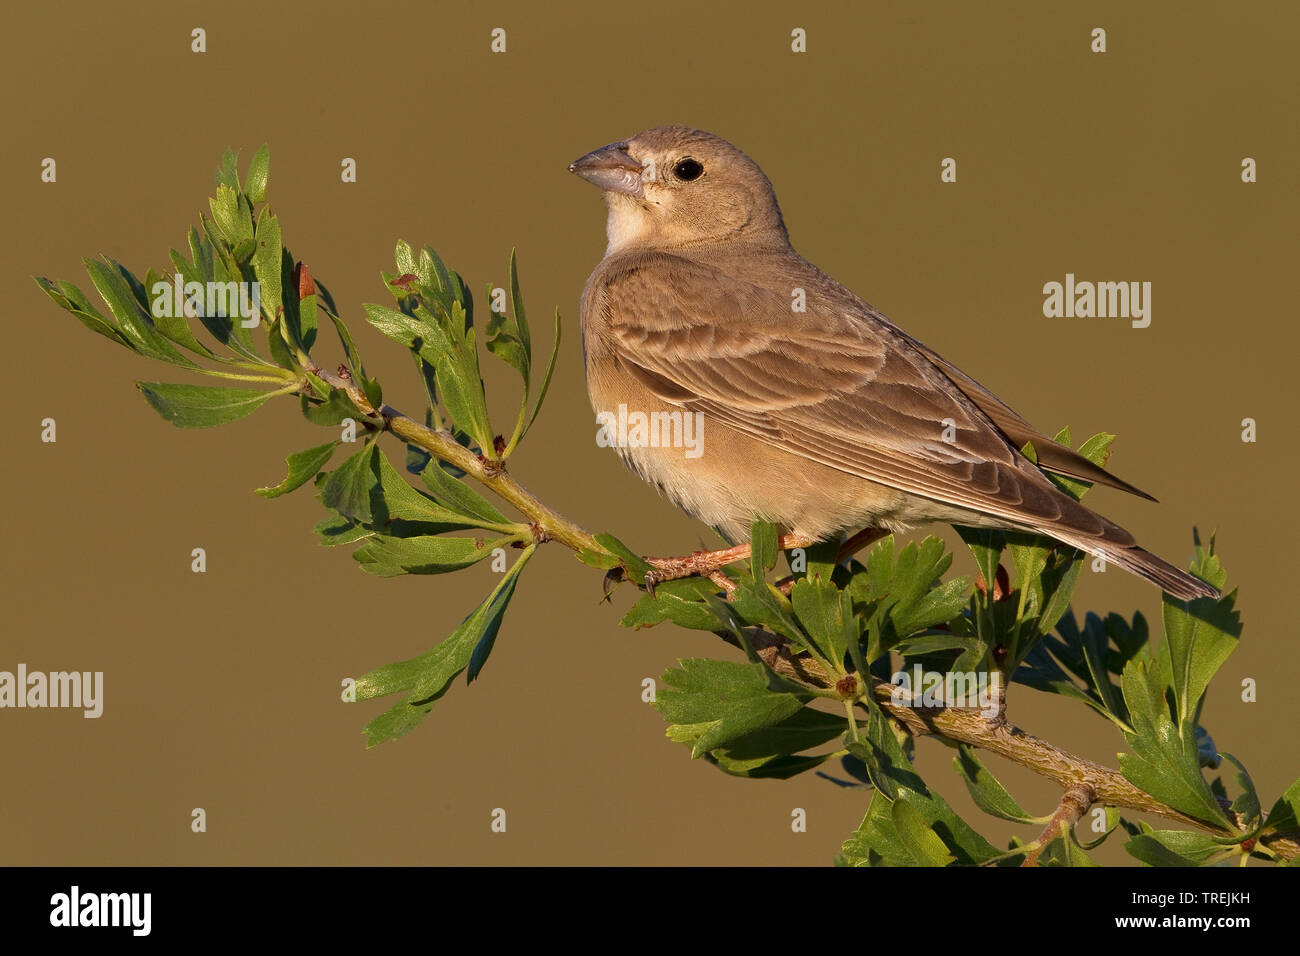 Pale Rock Sparrow (Carpospiza brachydactyla), sitting on a bush, Turkey Stock Photo